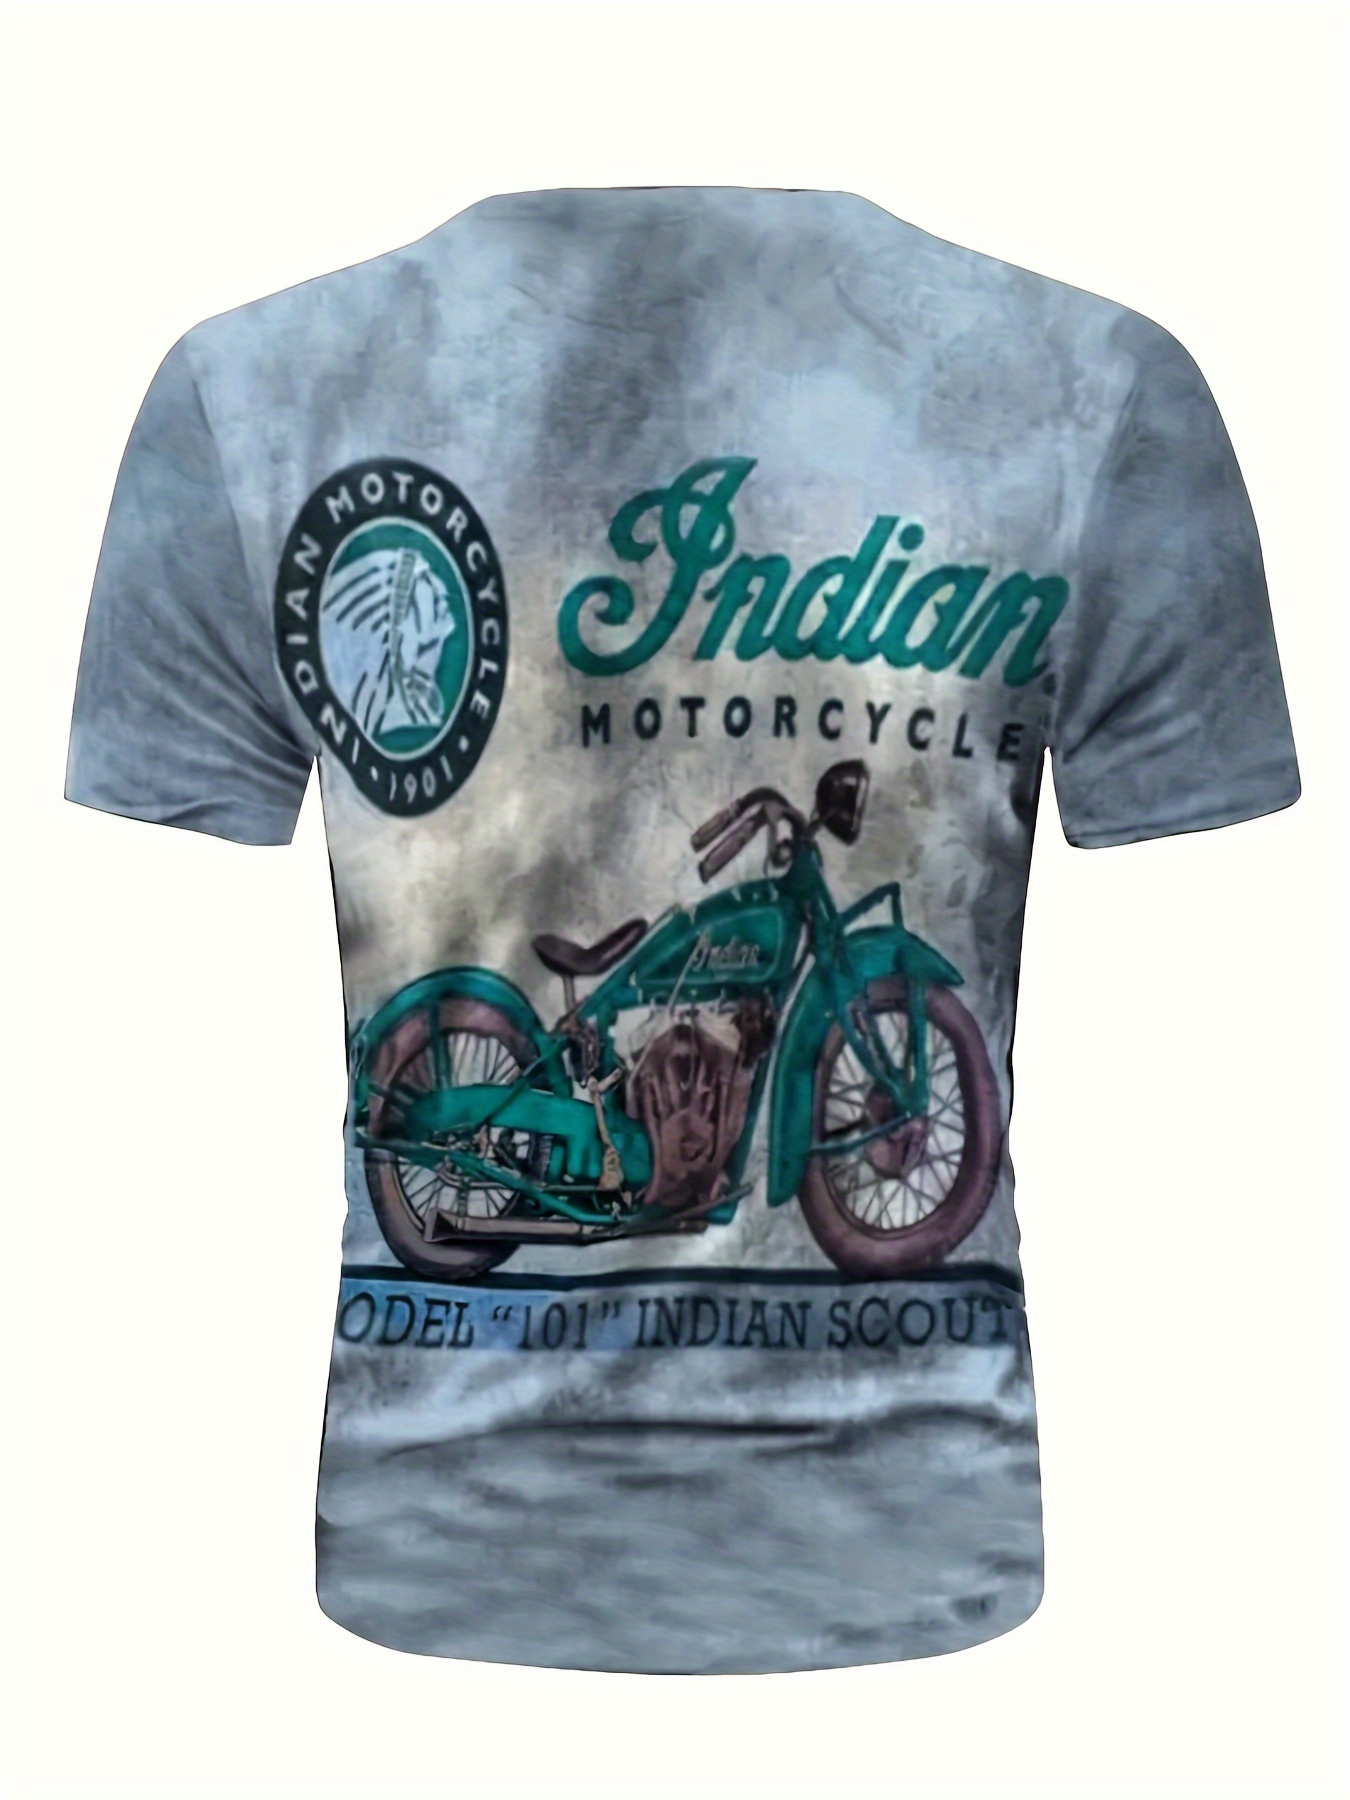 New Retro motorcycle series patterns T Shirt Graphic 3D print Tops Tees  Tshirt Streetwear Punk T-shirt Men clothes